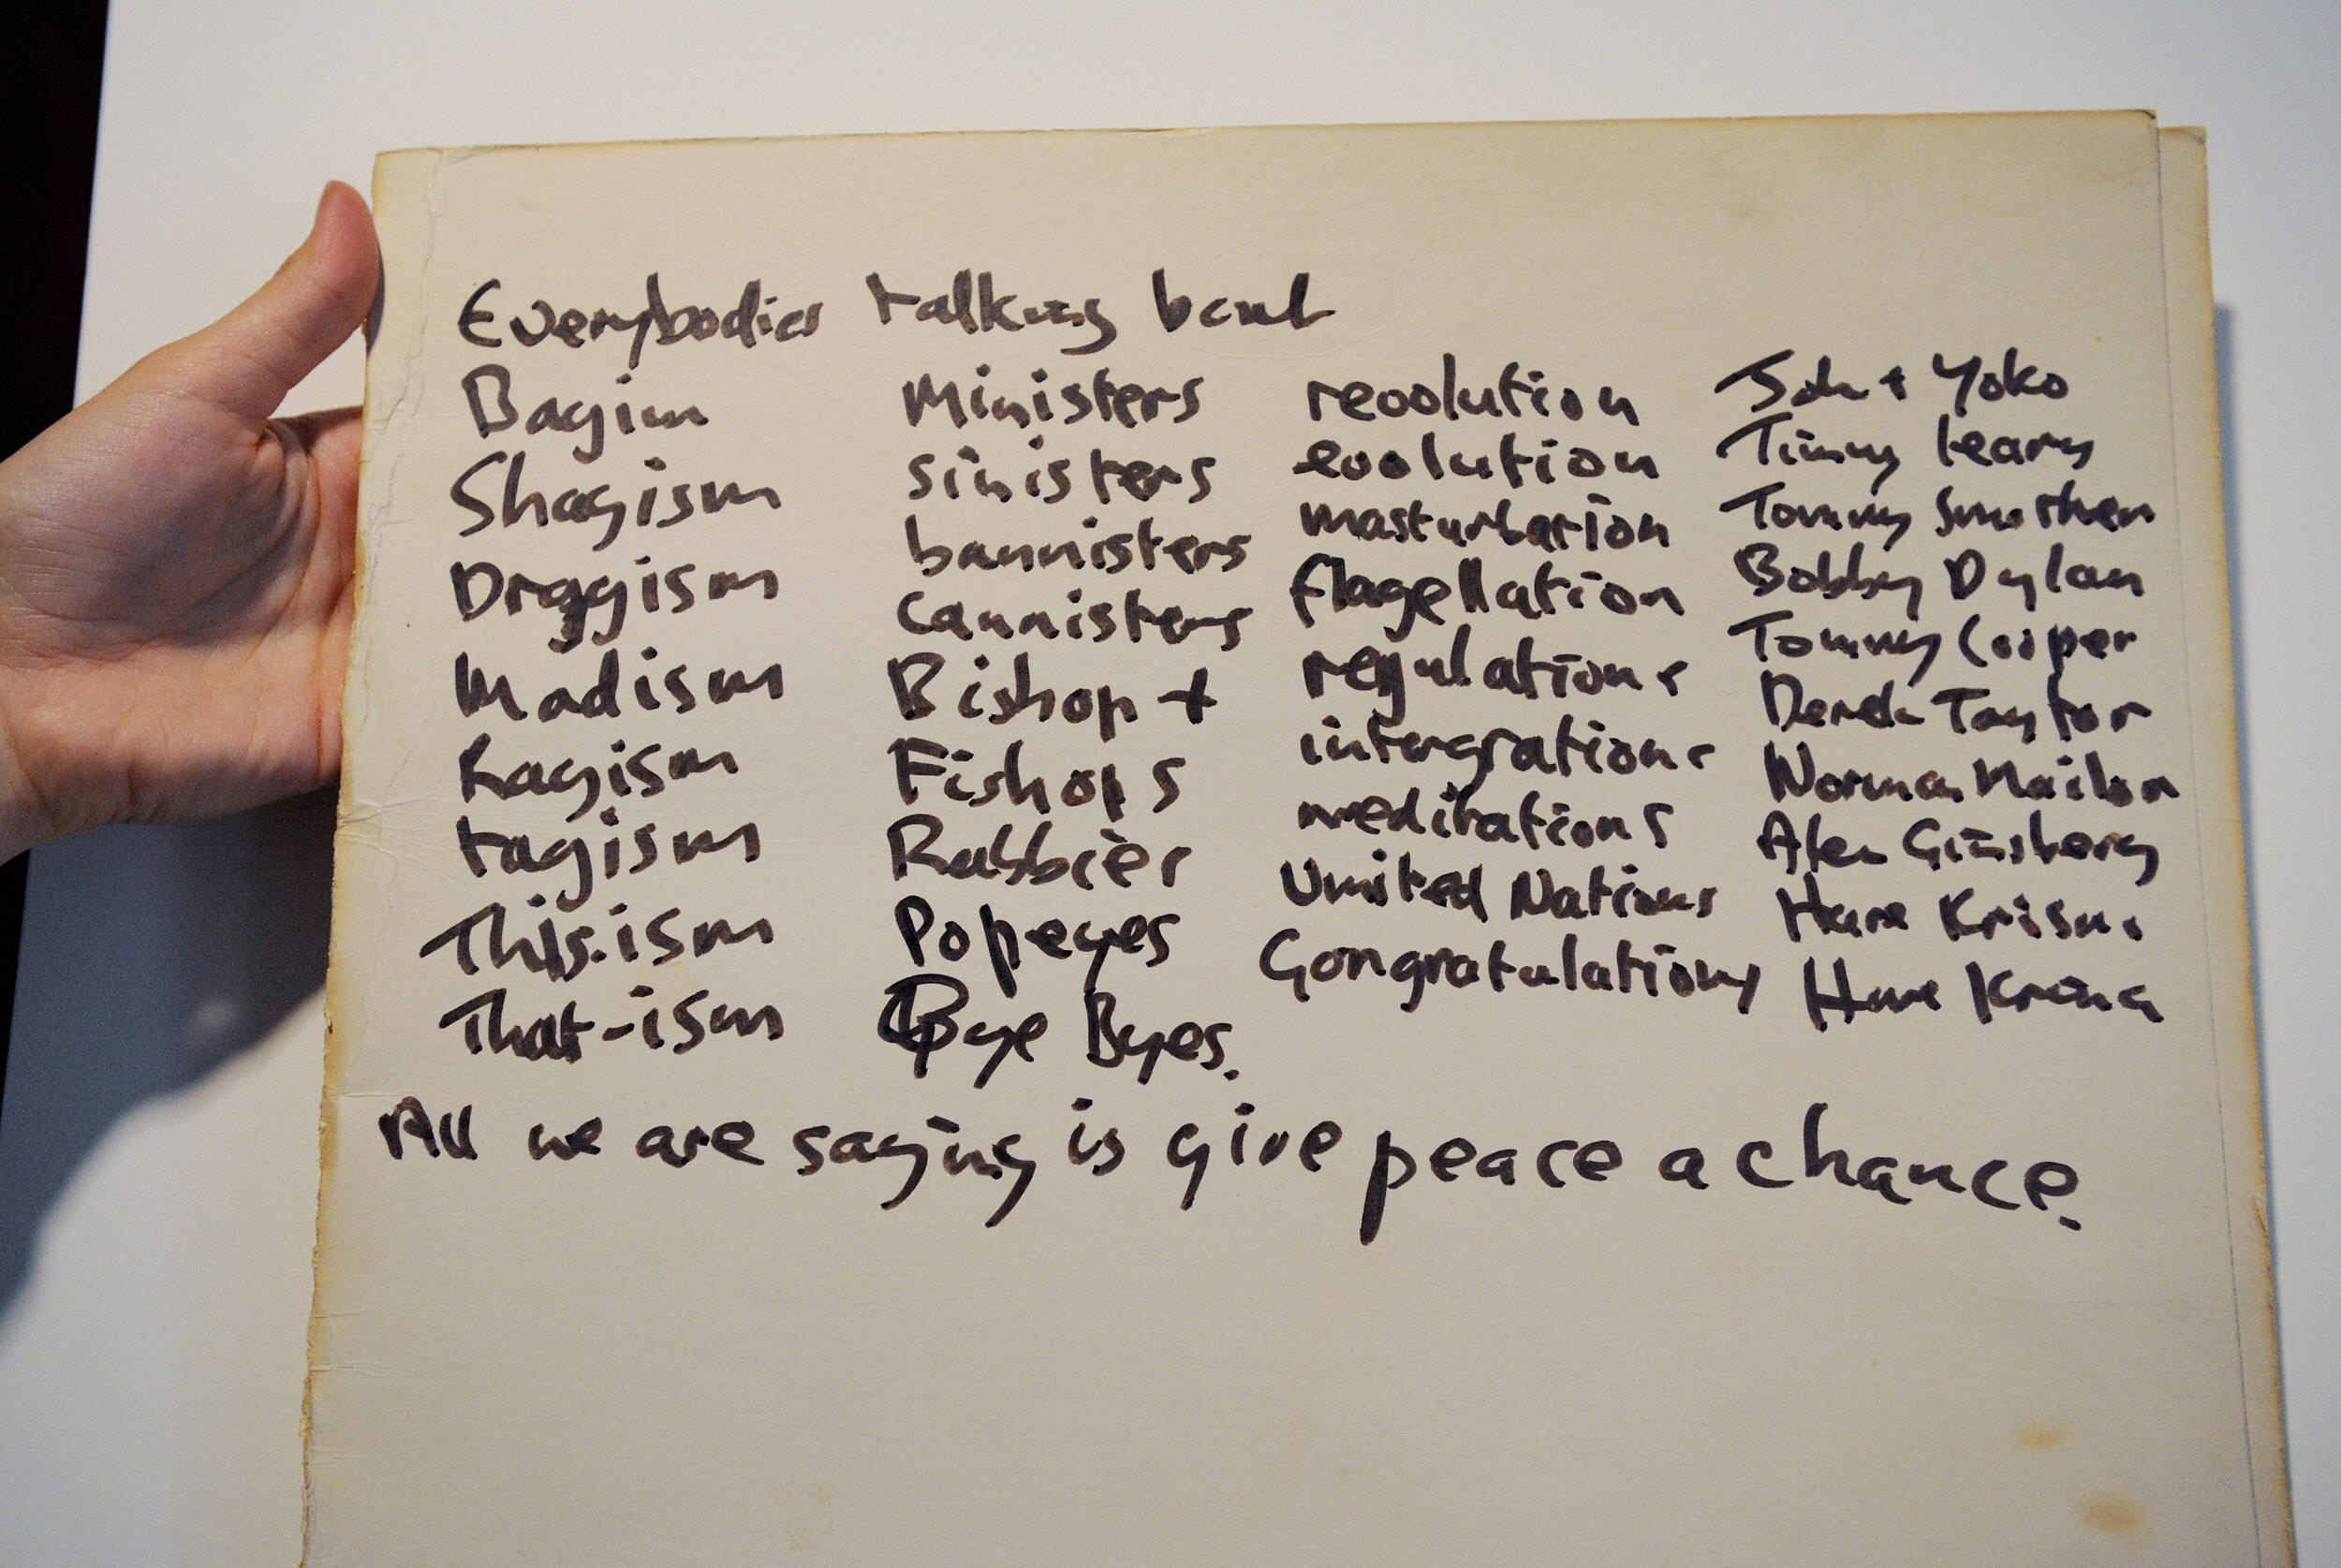 A hand holding John Lennon's handwritten lyrics for "Give Peace a Chance"